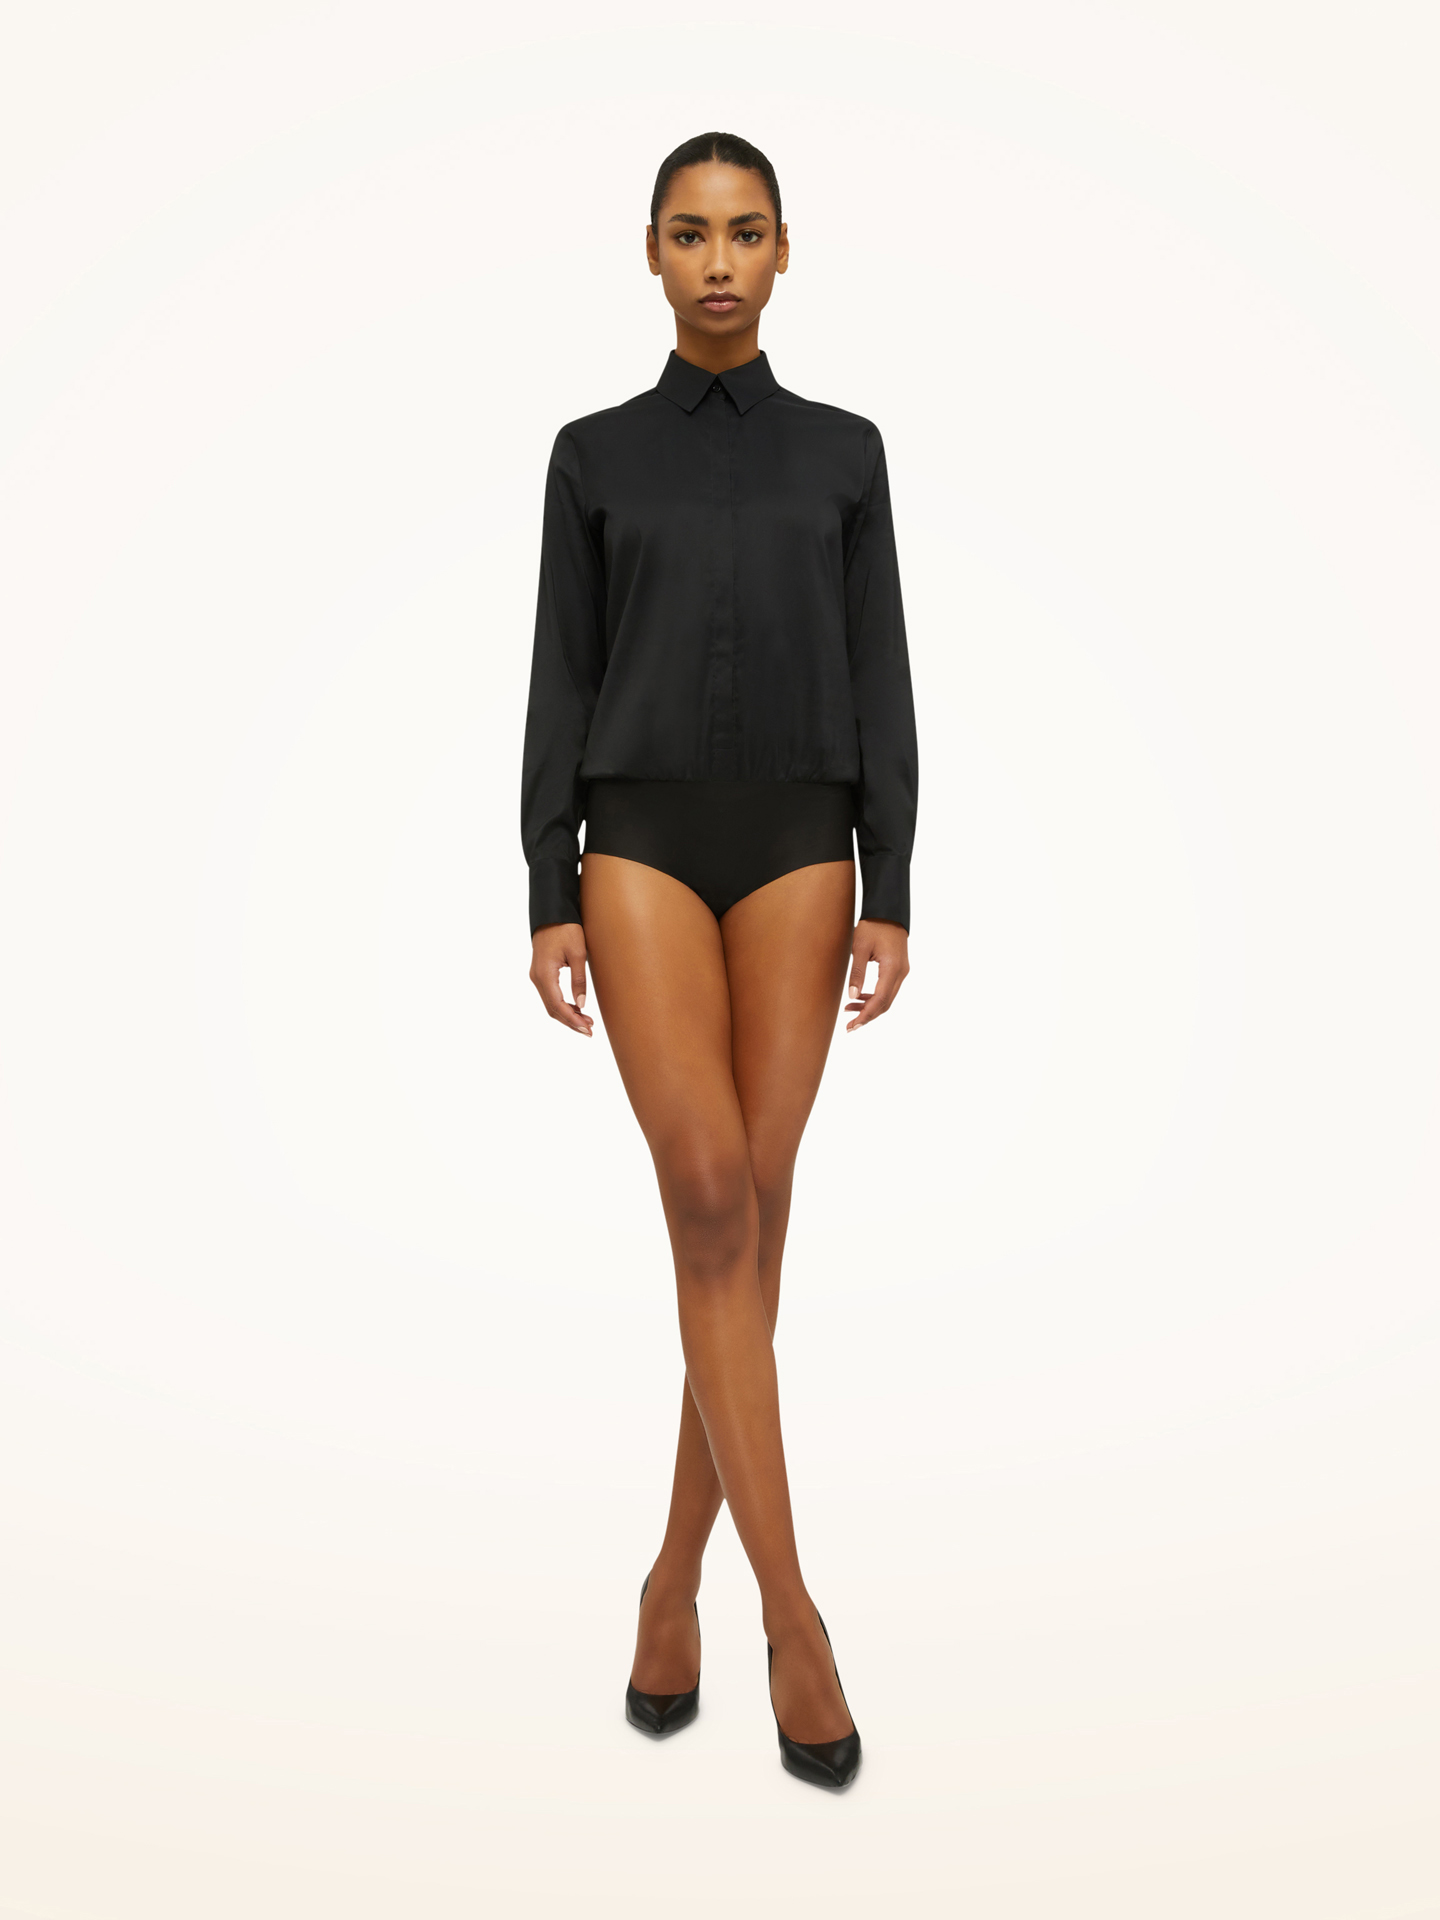 Wolford – London Effect Panty Body, Frau, black, Größe: 34